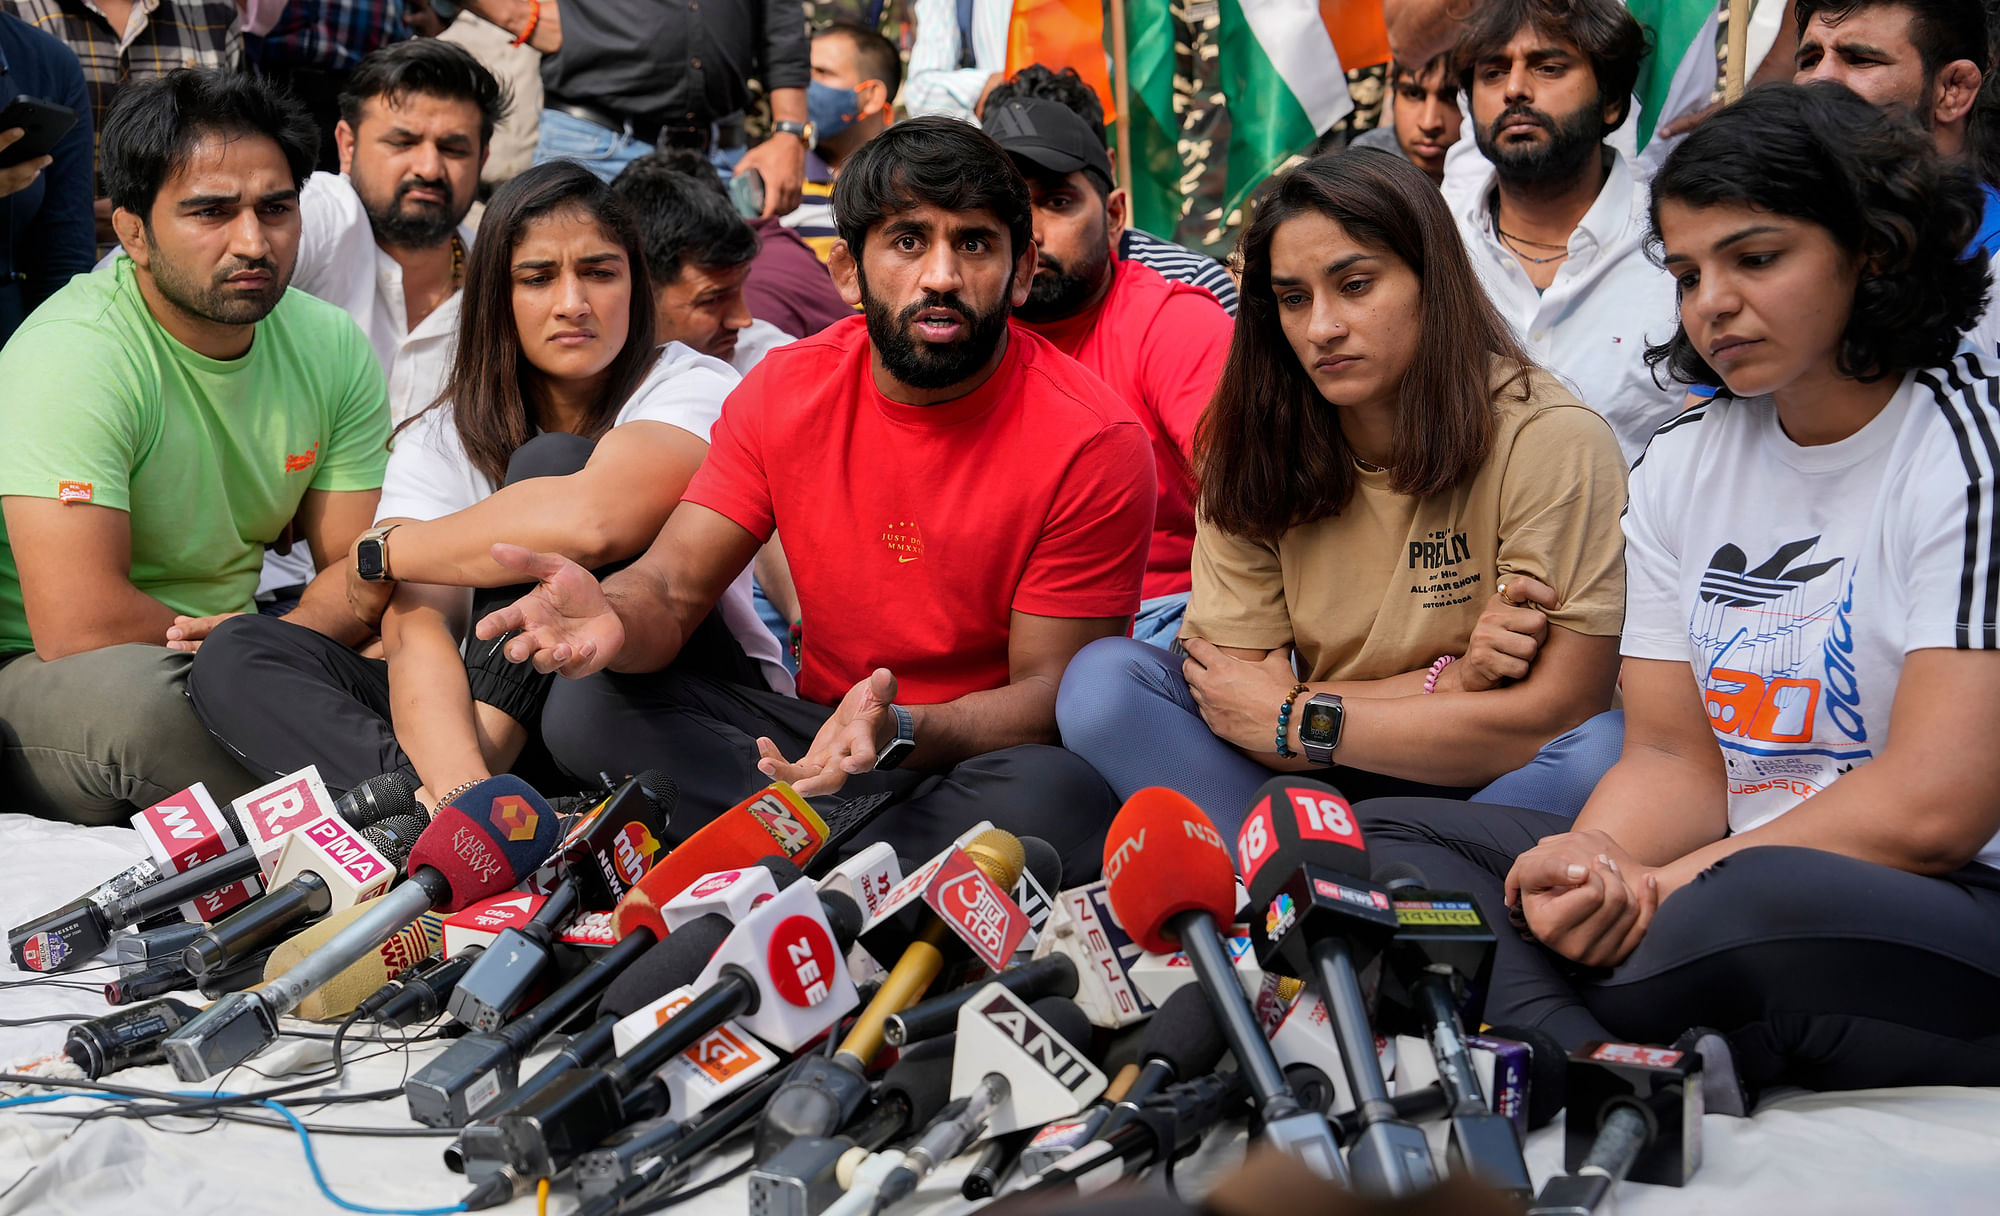 <div class="paragraphs"><p>Wrestlers Bajrang Punia, Vinesh Phogat, Sakshi Malik and others addressing the press during their protest in Delhi's Jantar Mantar.&nbsp;</p></div>